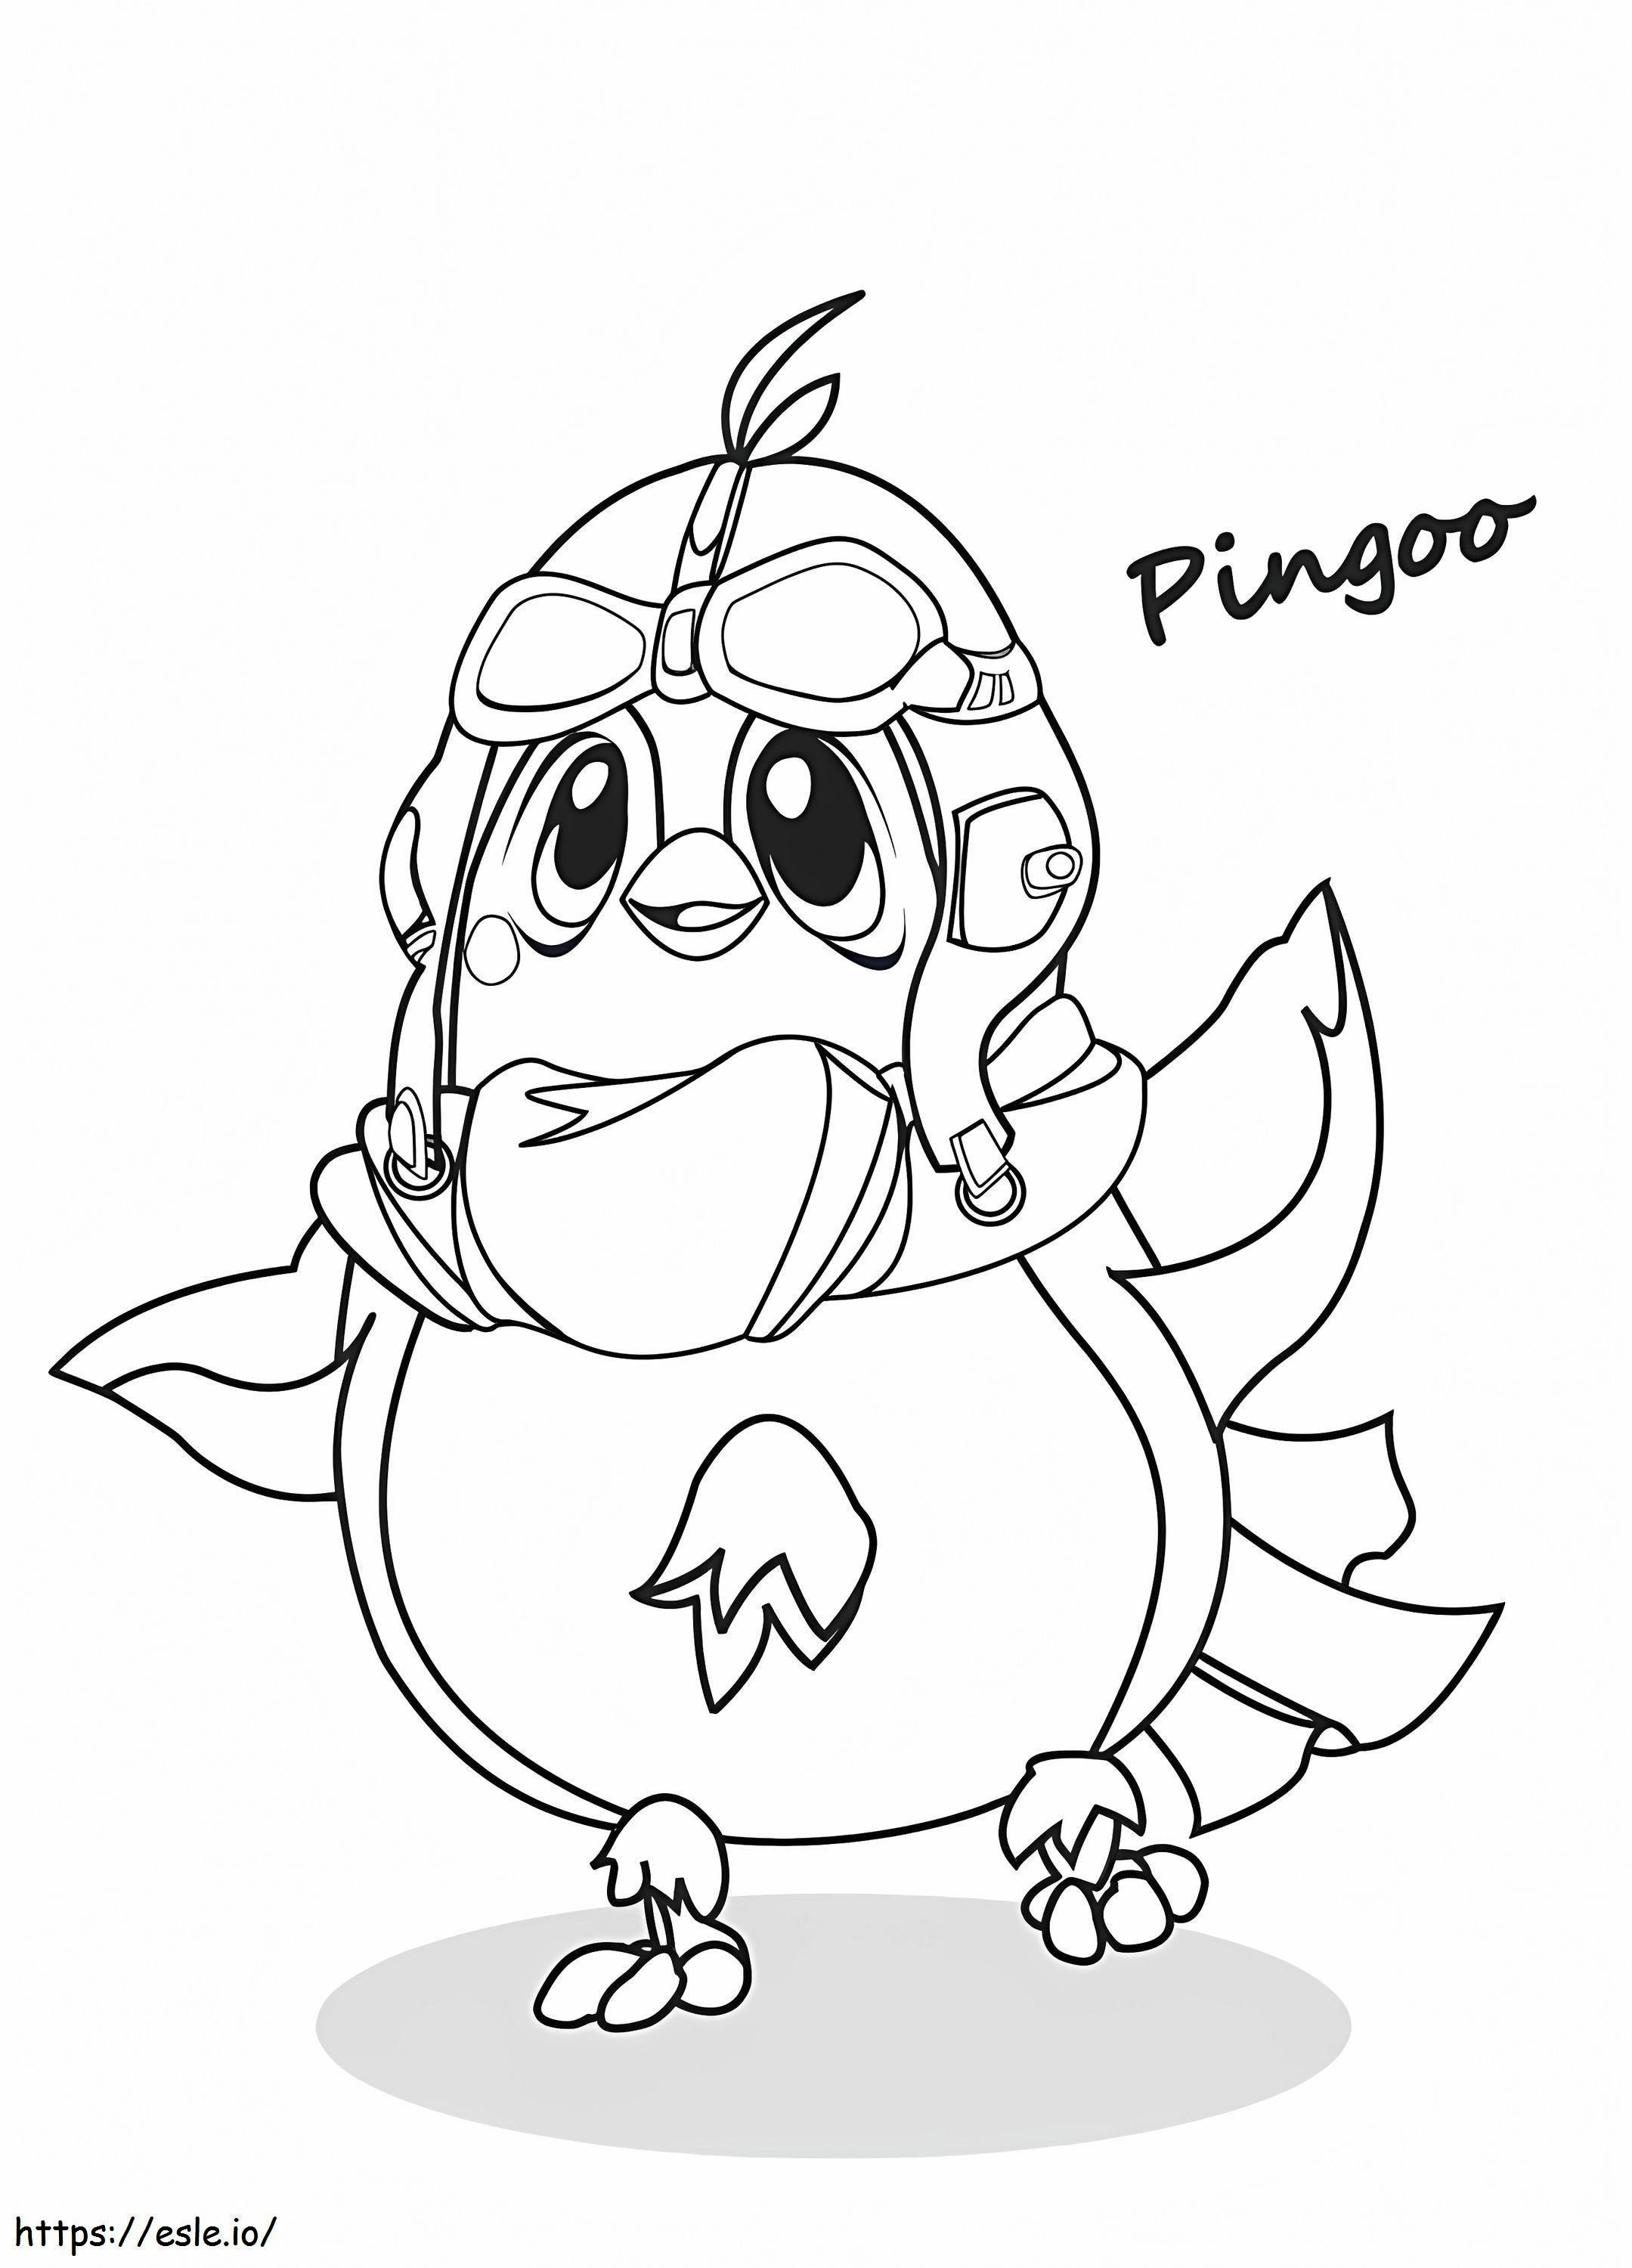 Pingoo em Panfu para colorir